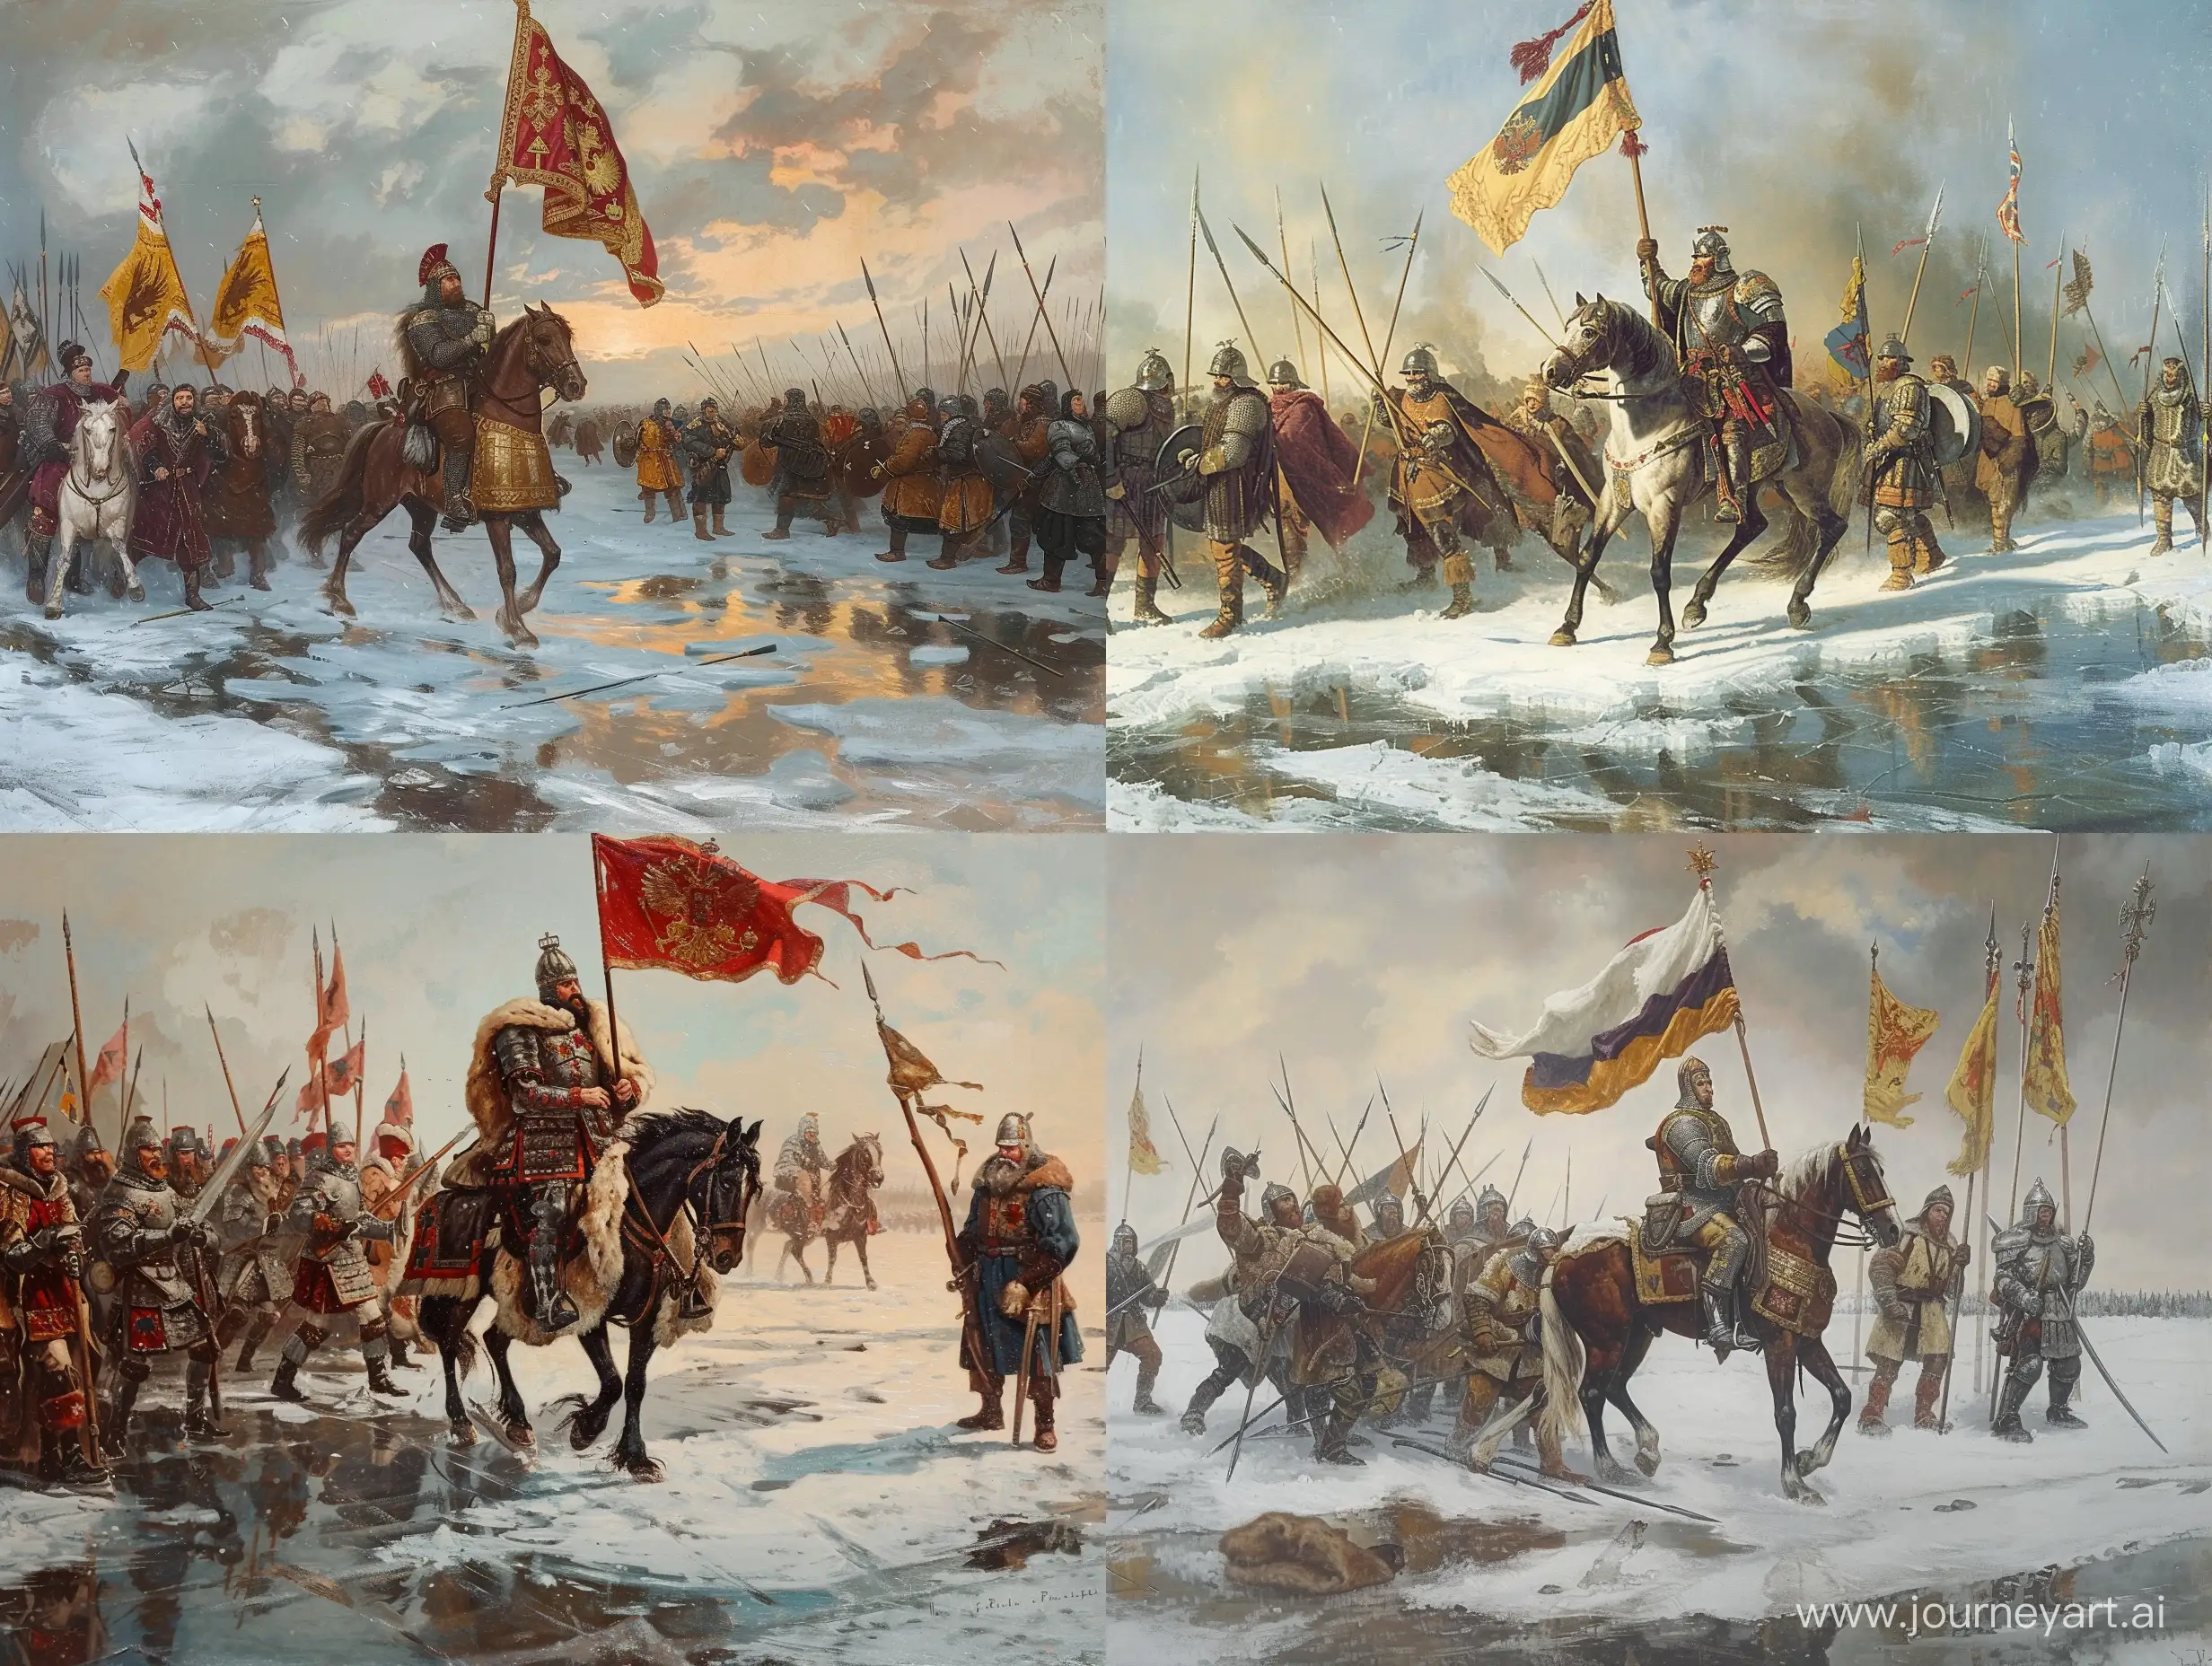 Ледовое побоище на Чудском озере, Александр Невский на коне  с флагом,шведы с копьями,флагами, в рыцарских доспехах, мечи, лед,снег